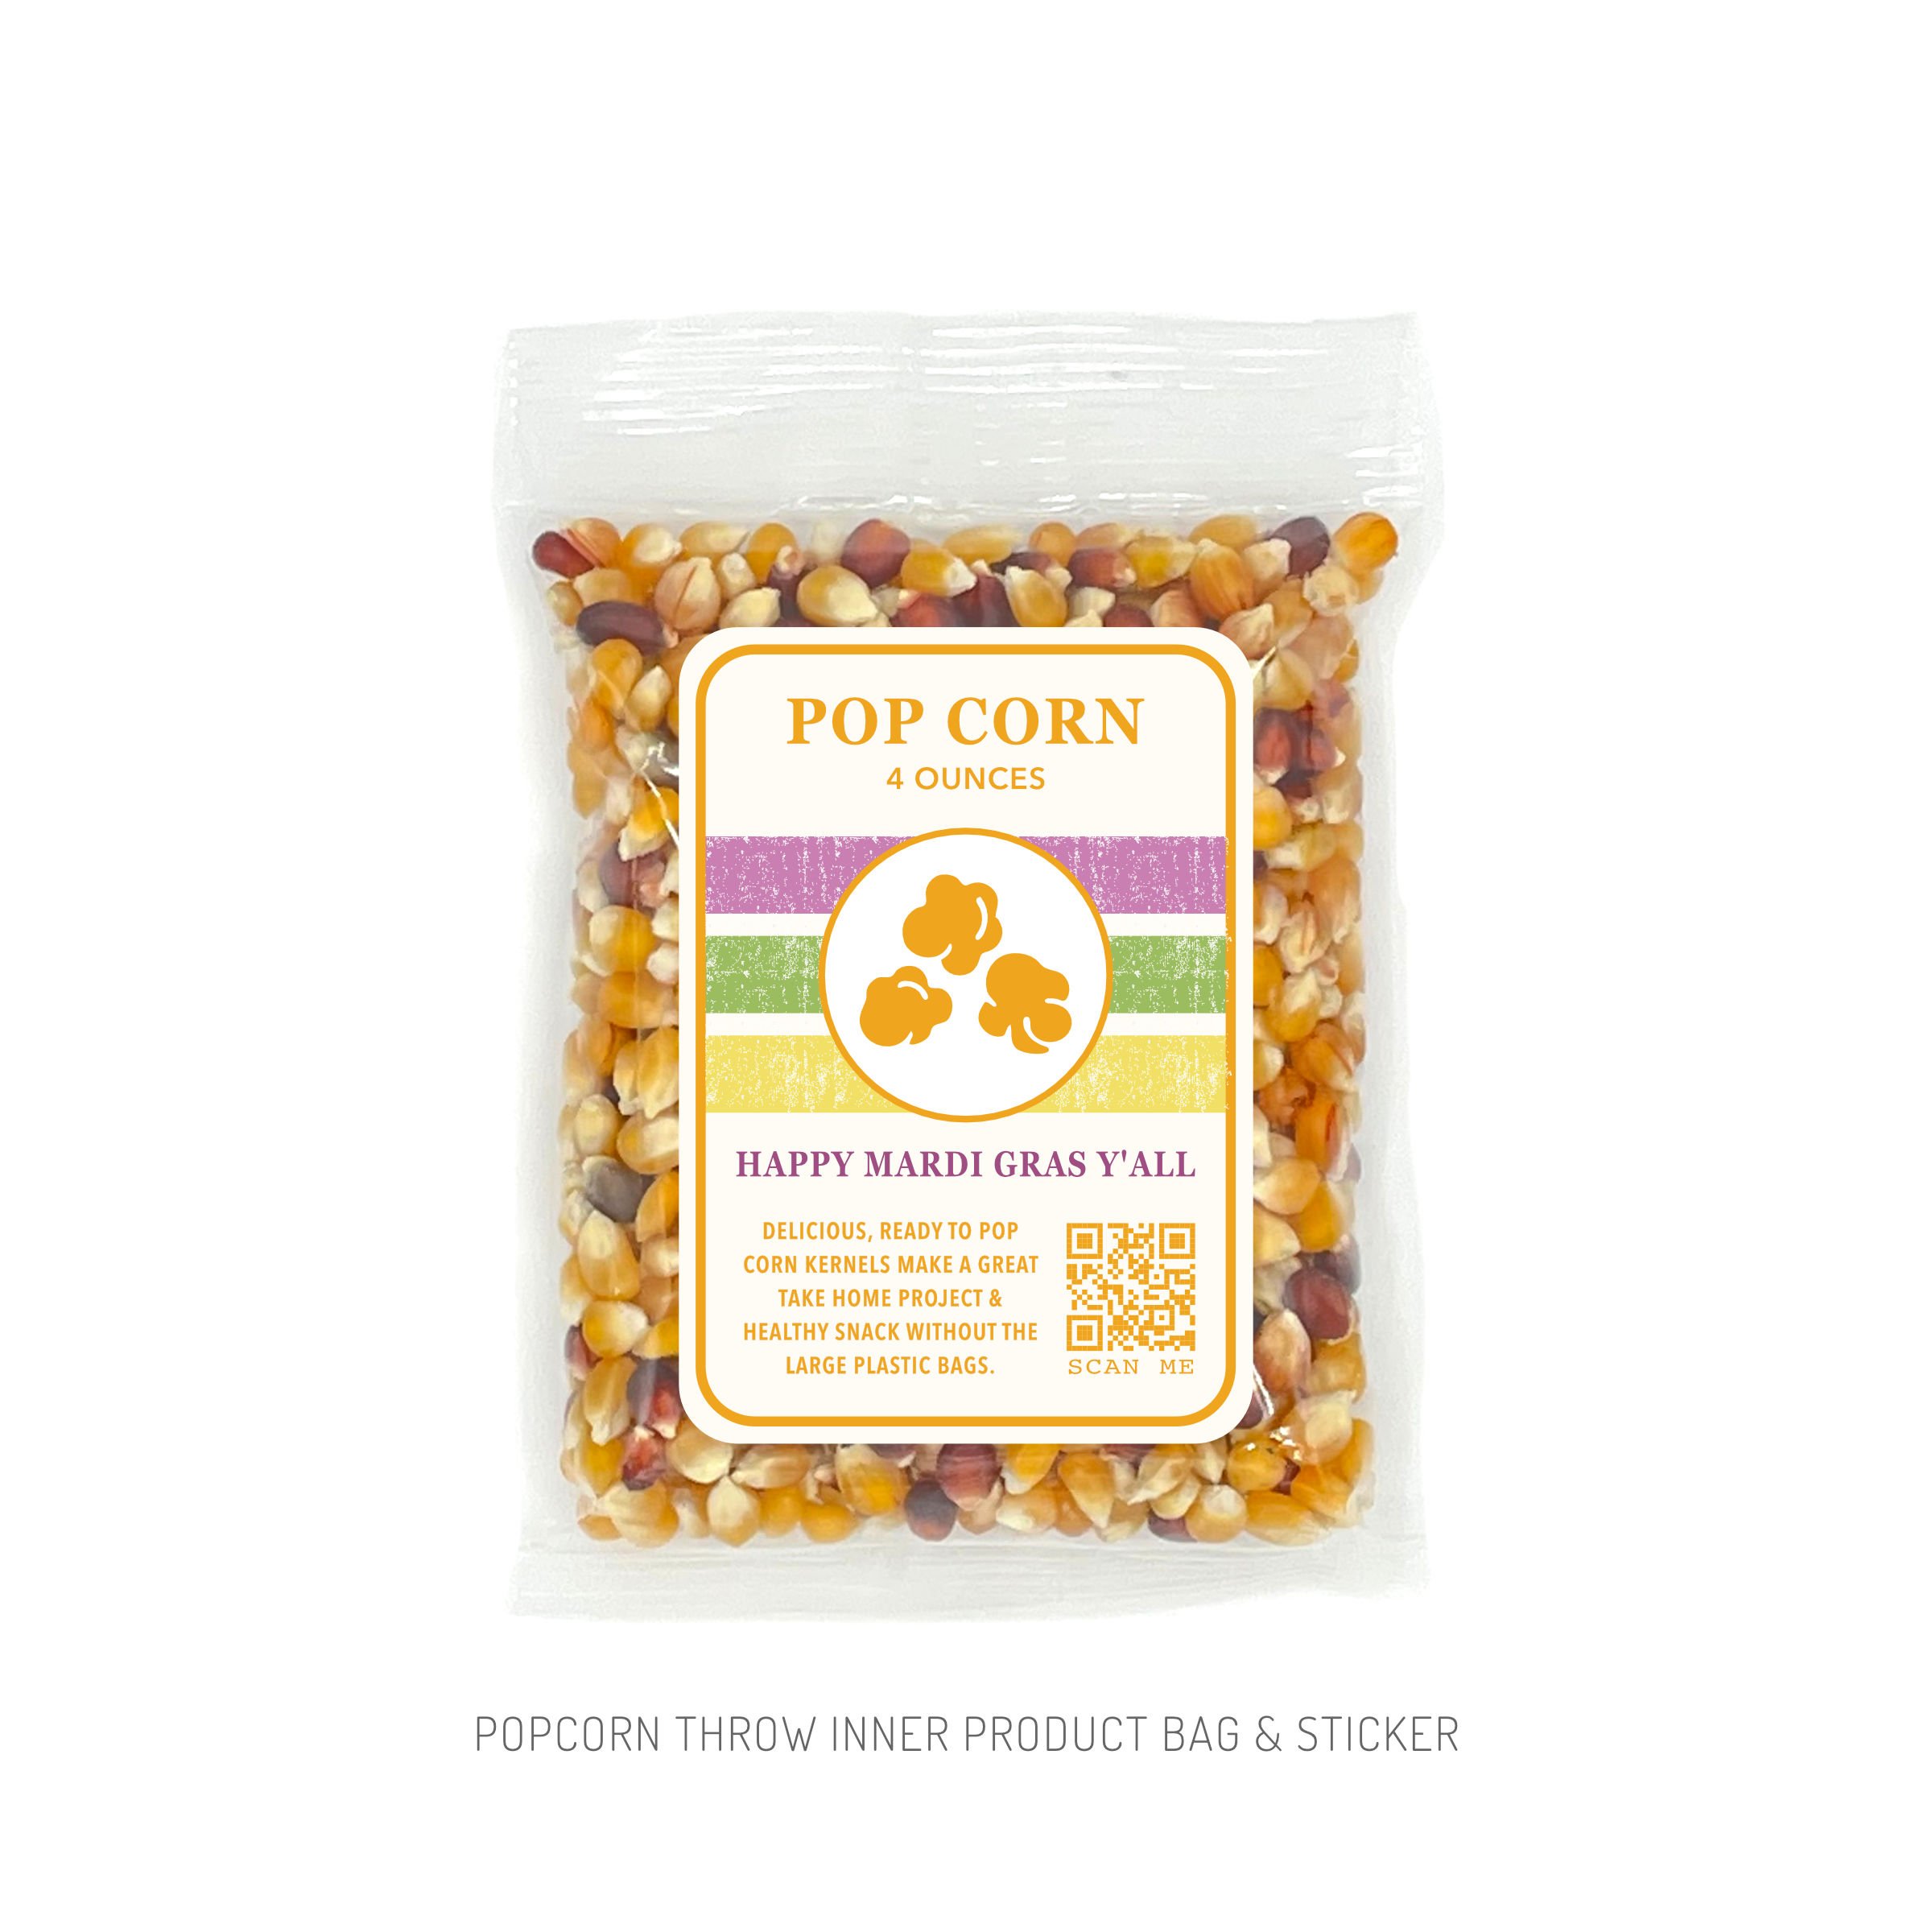 Mardi Gras Popcorn Product Bag w: sticker.jpg